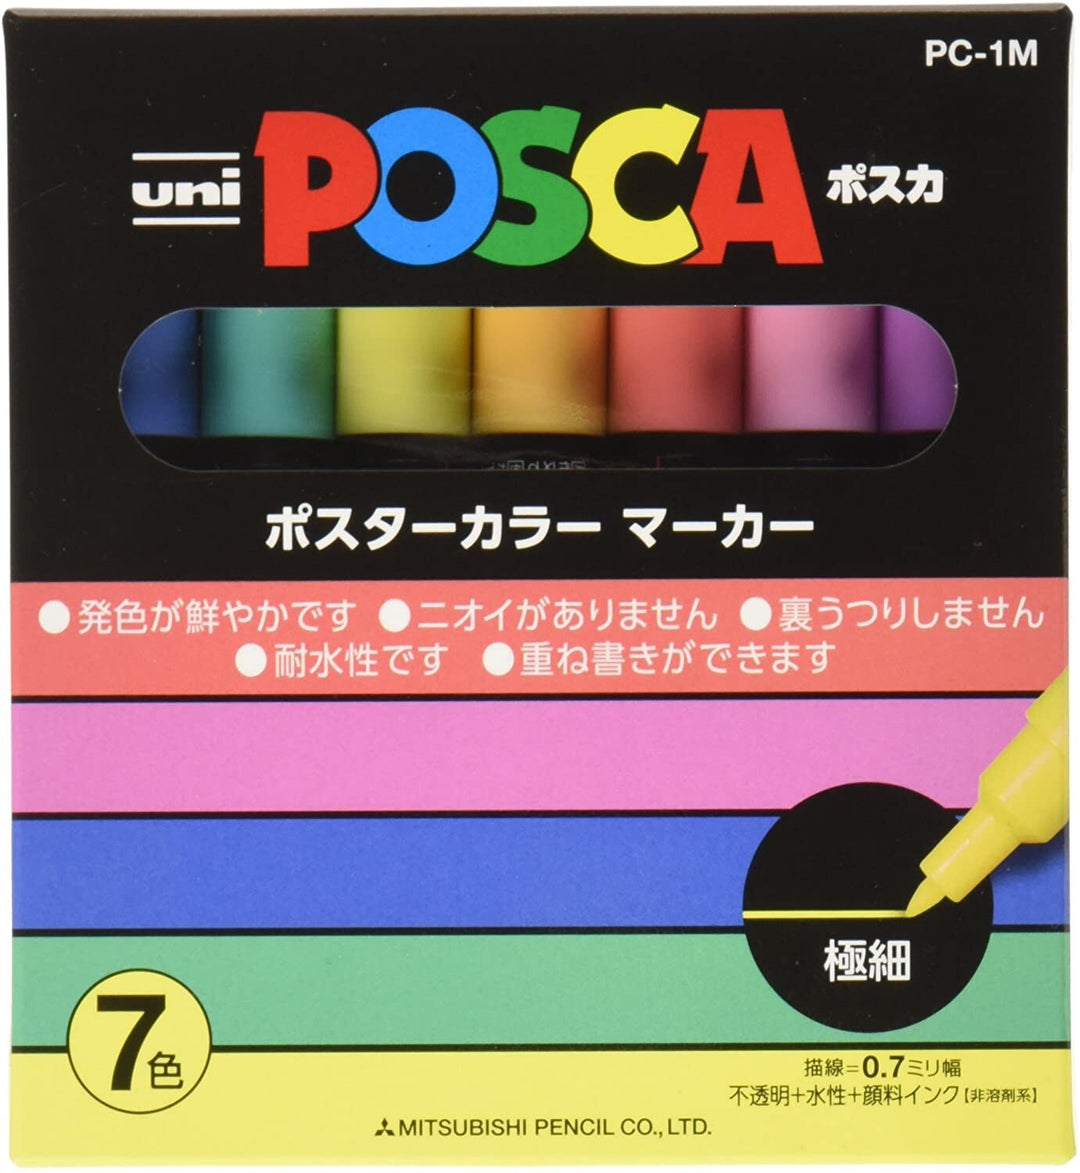 POSCA Paint Marker, PC-1M Extra Fine,Sky Blue